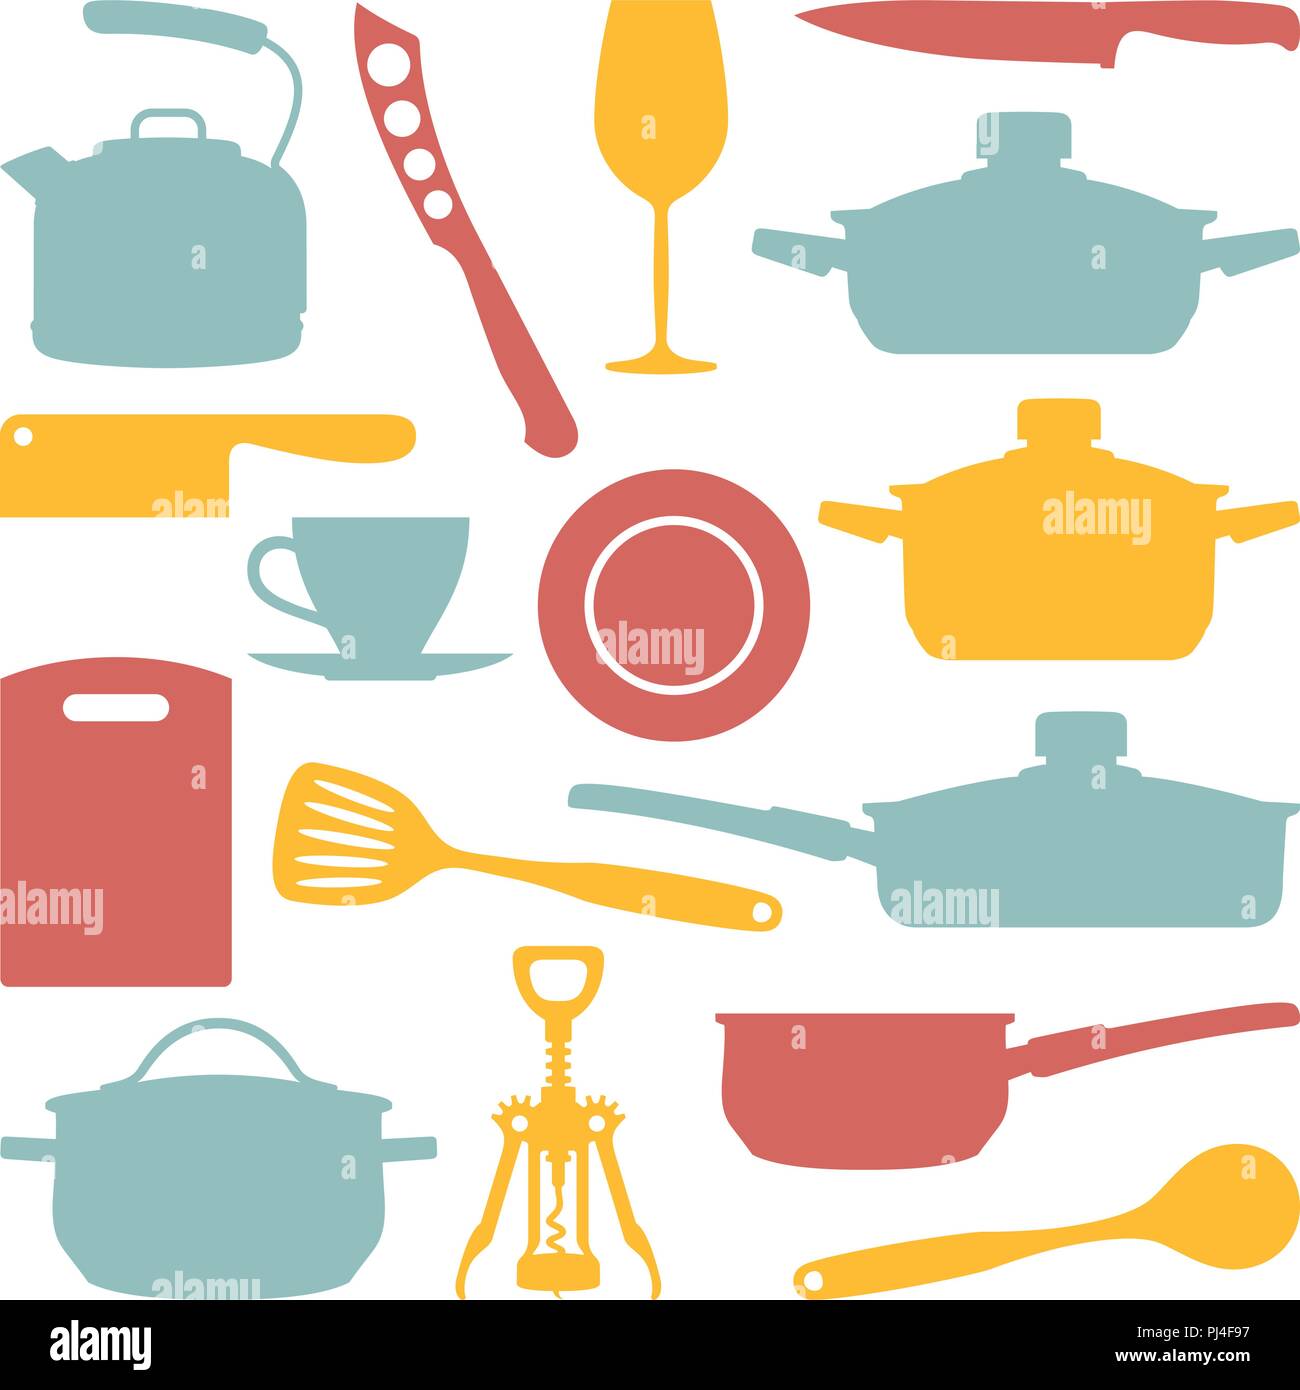 https://c8.alamy.com/comp/PJ4F97/kitchen-utensils-vector-silhouettes-in-three-colors-PJ4F97.jpg